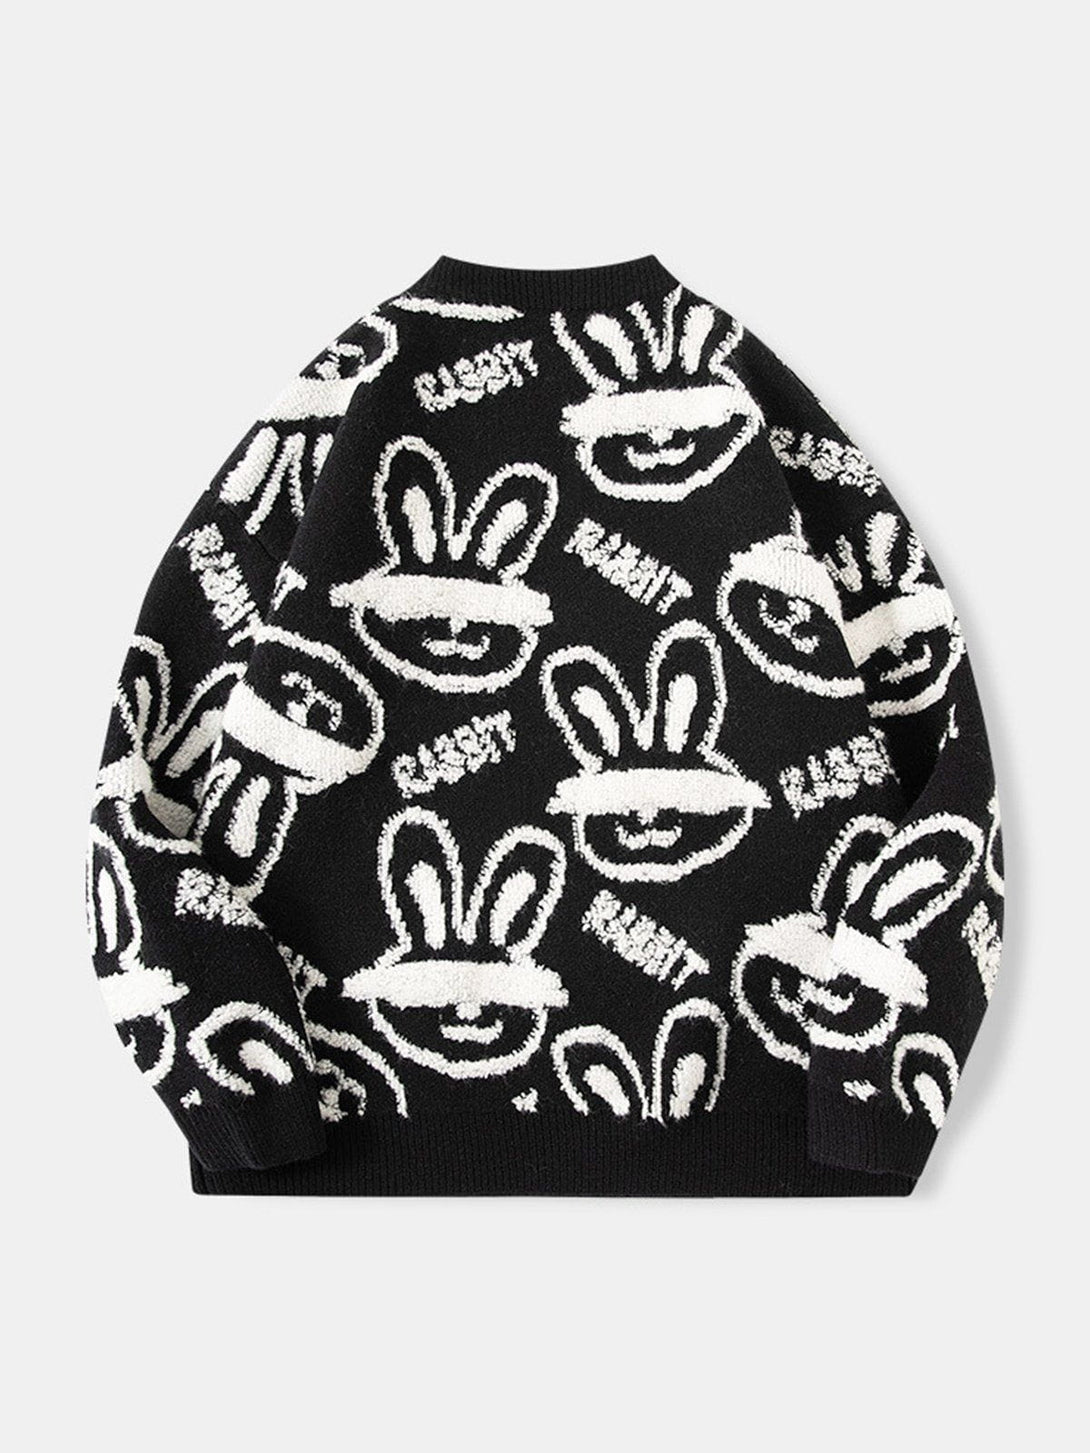 Levefly - Blindfolded Rabbit Knit Sweater - Streetwear Fashion - levefly.com